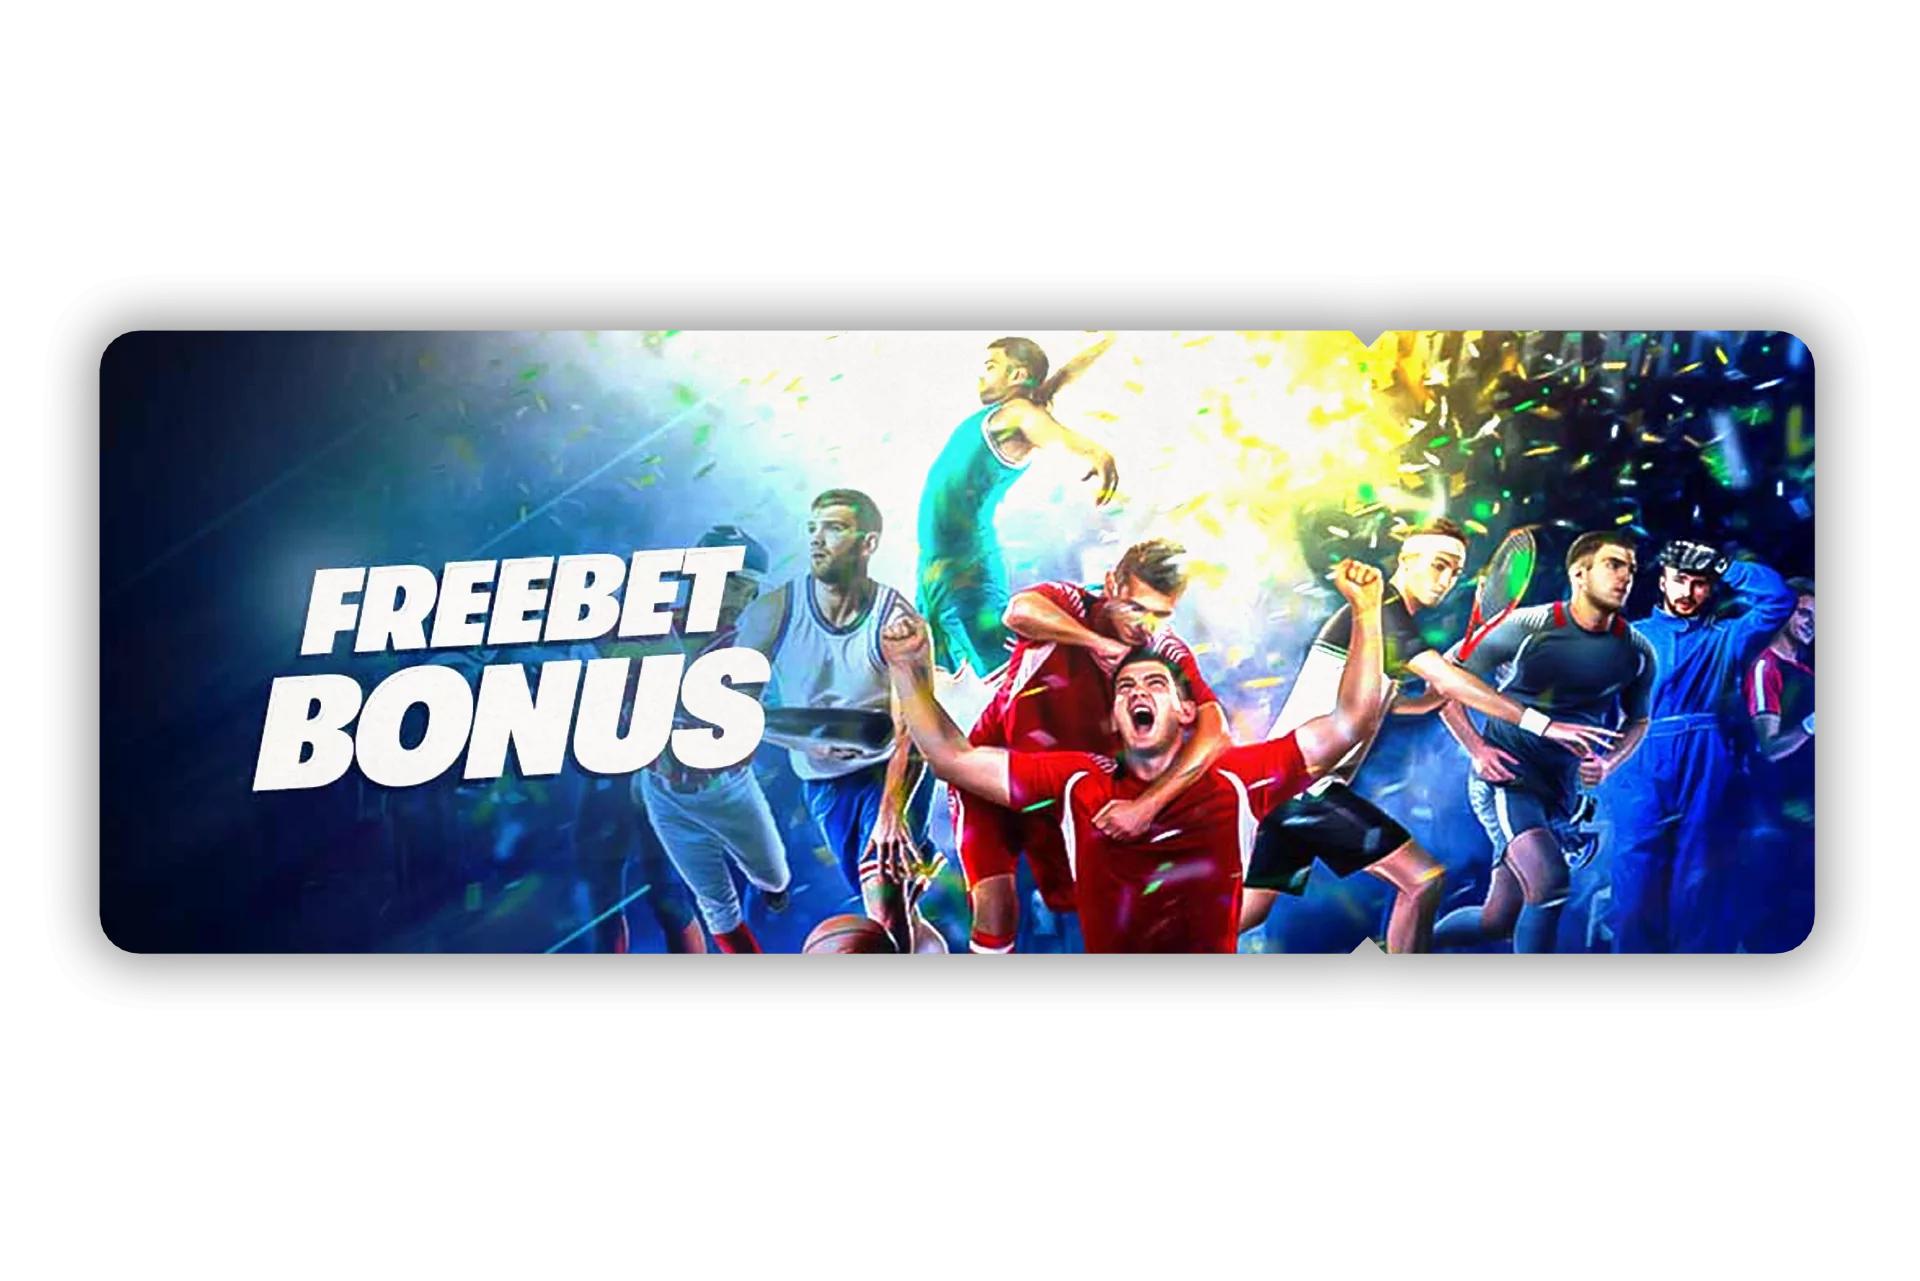 Freebet bonus for betting on sports.